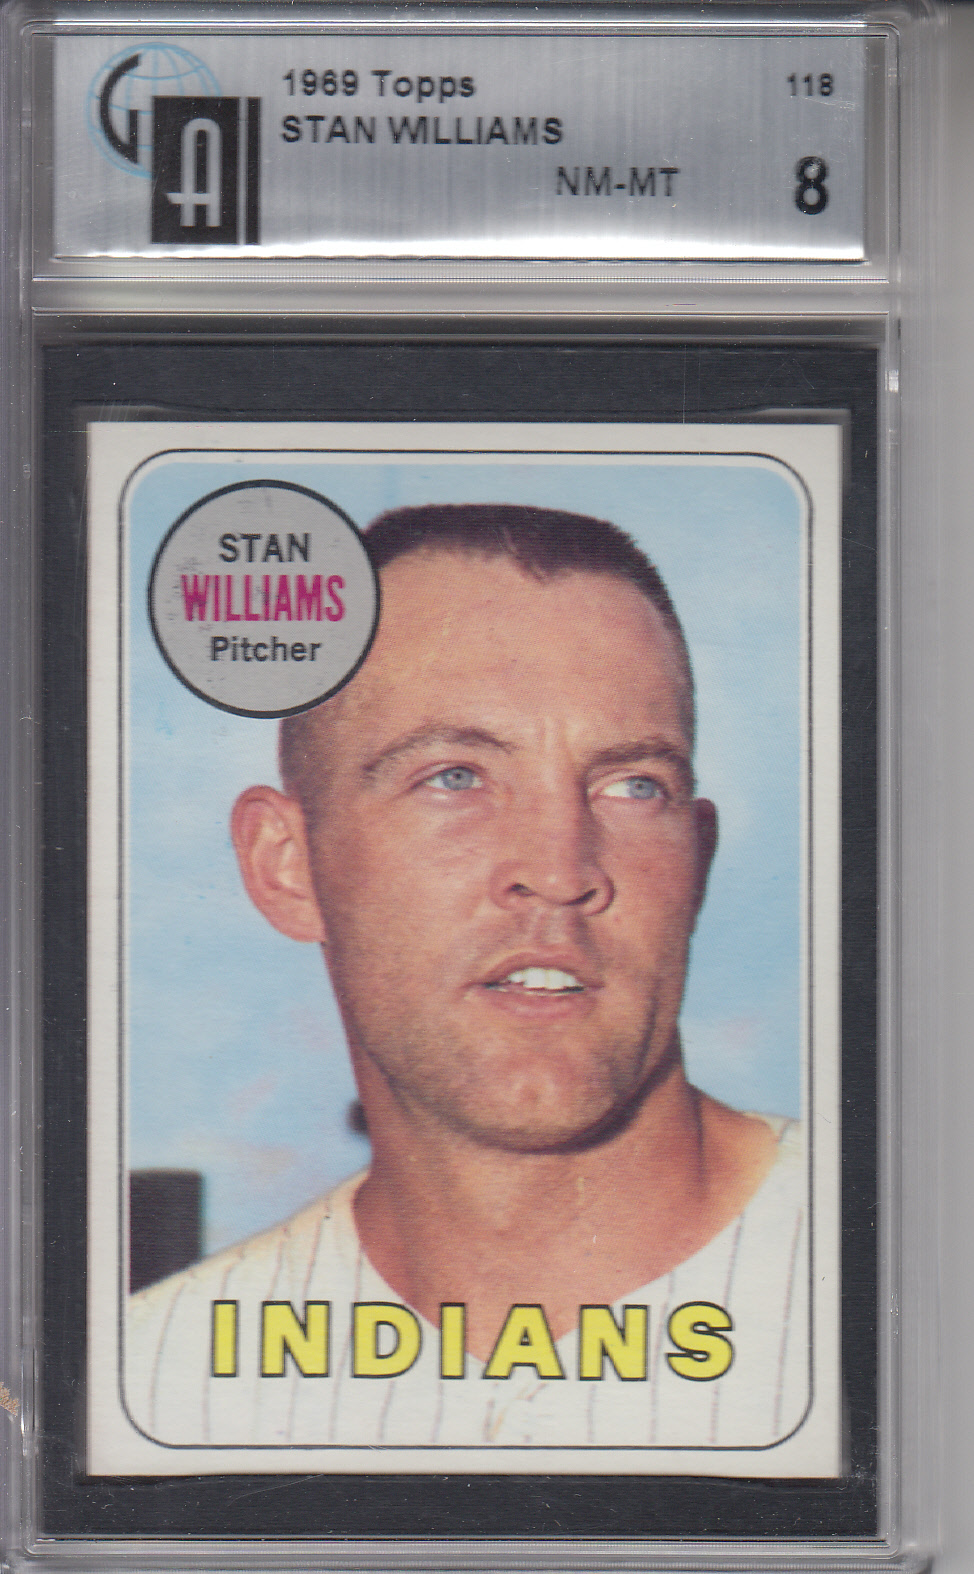 1969 Topps #118 Stan Williams INDIANS GAI 8 NM-MT Z14777